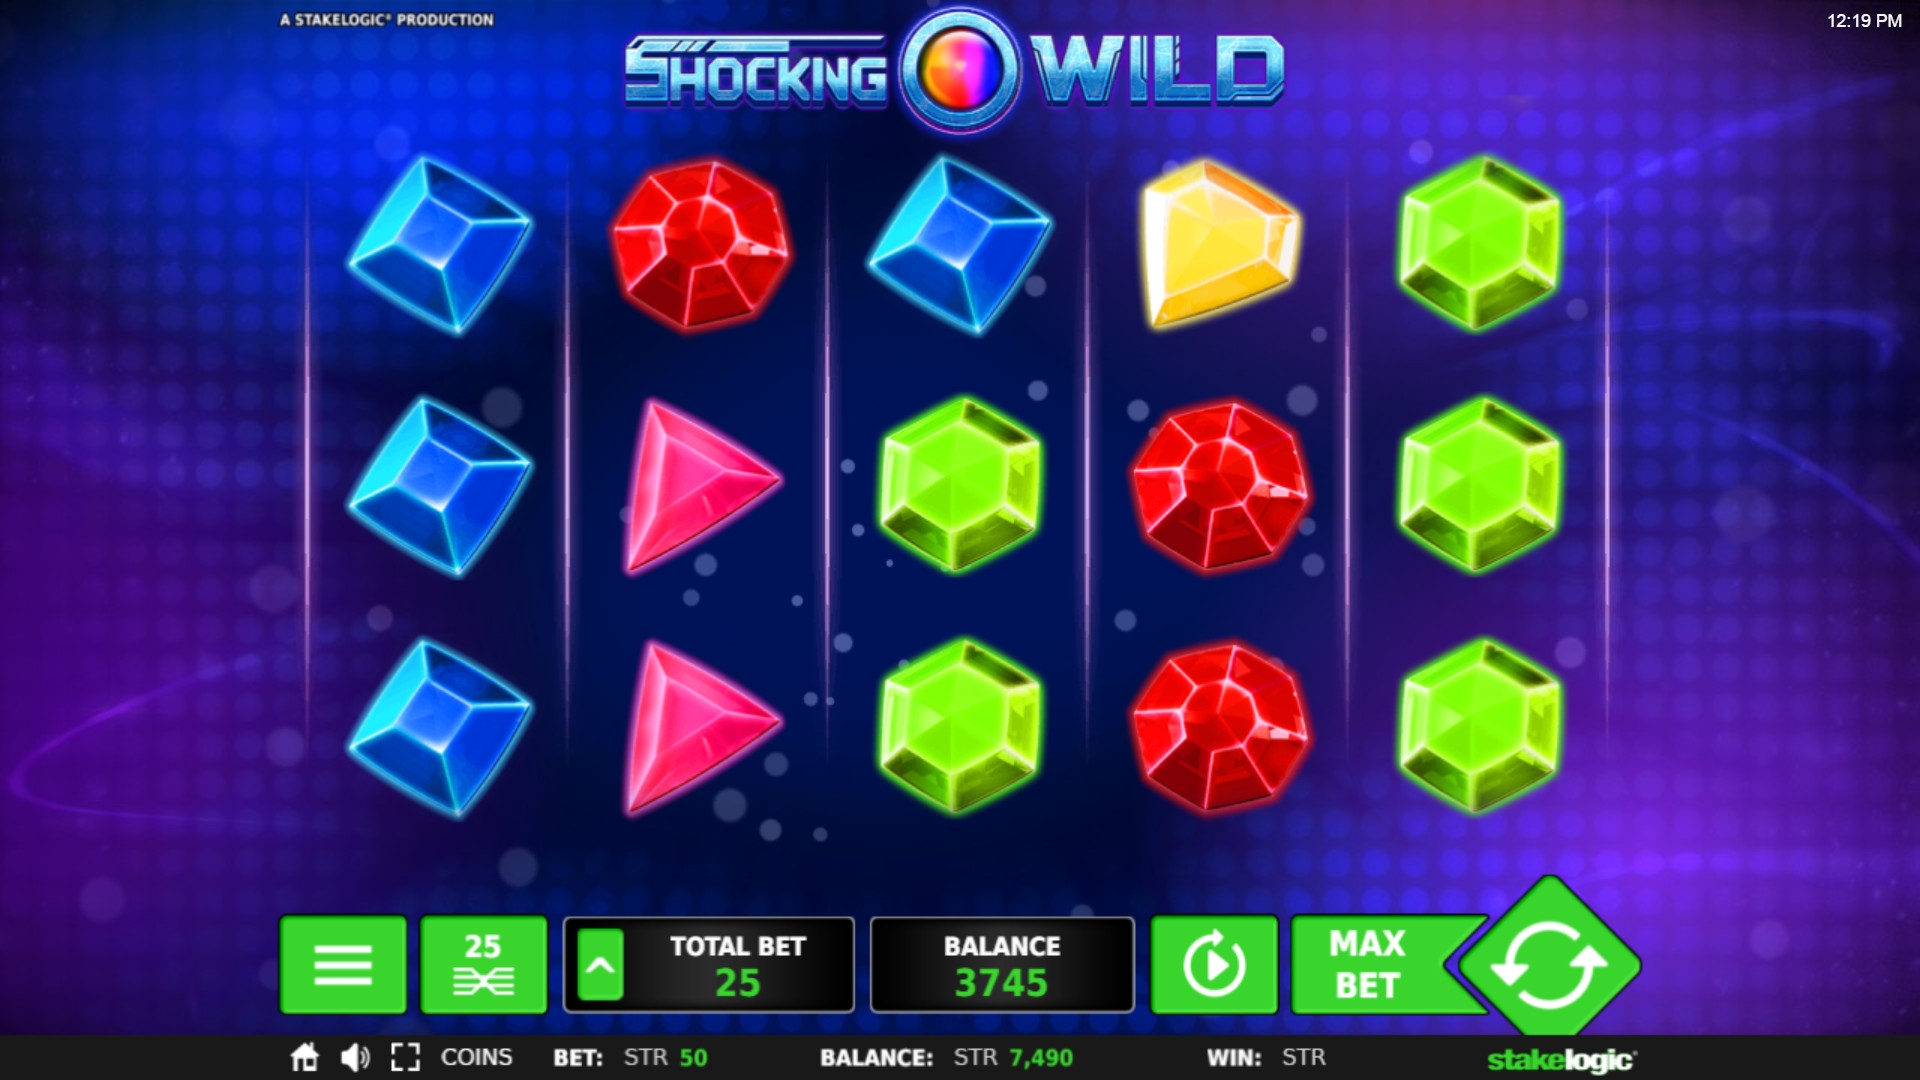 Shocking Wild (Shocking Wild) from category Slots